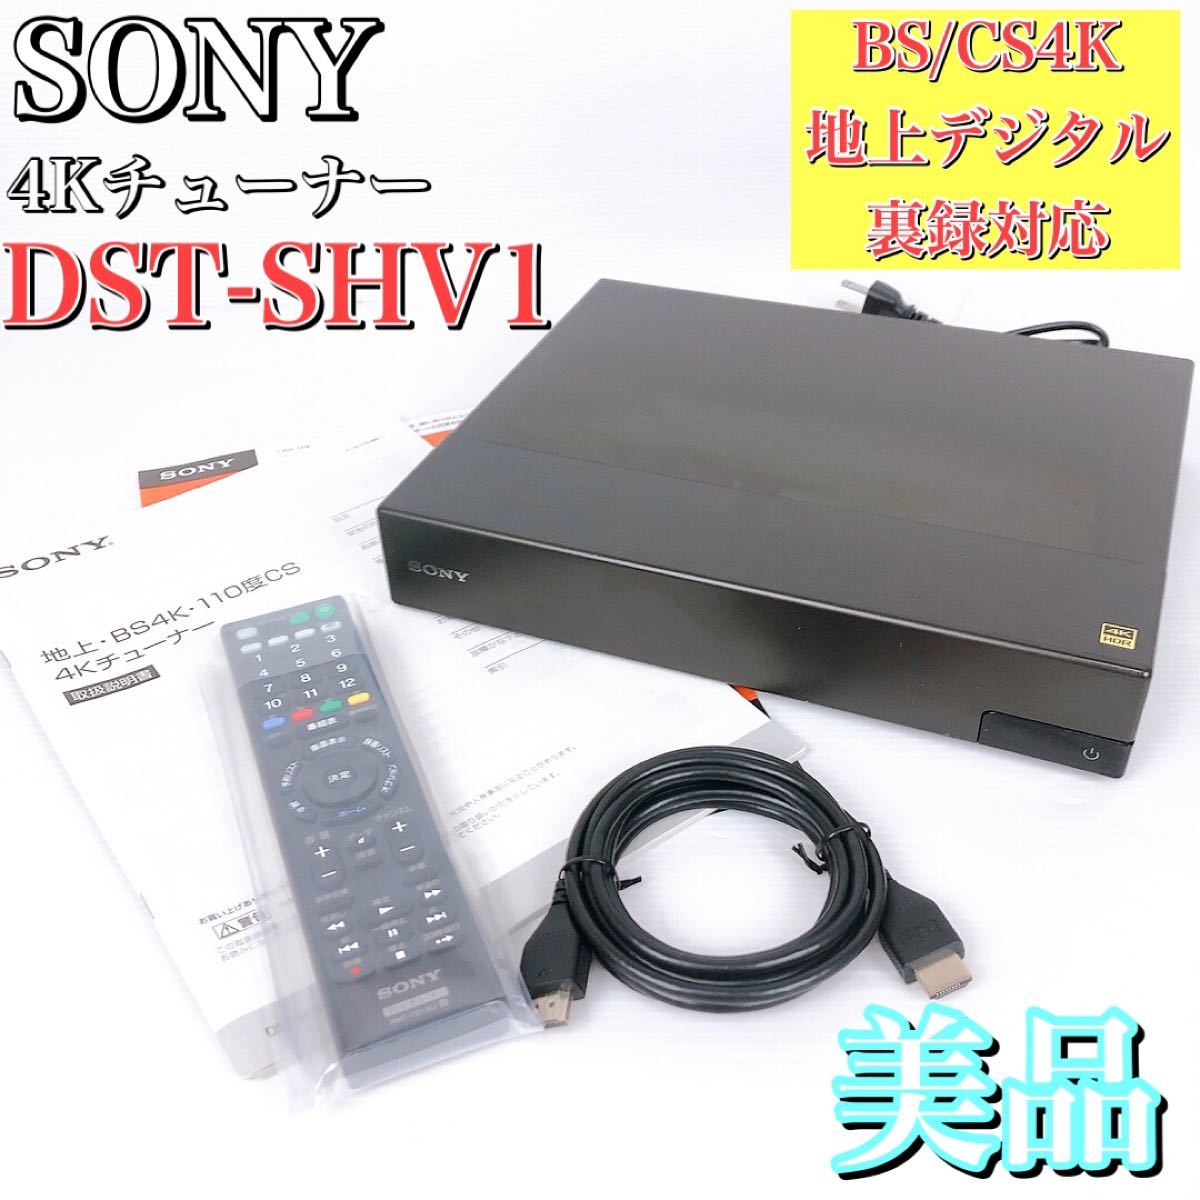 SONY 4Kチューナー DST-SHV1 - 映像機器